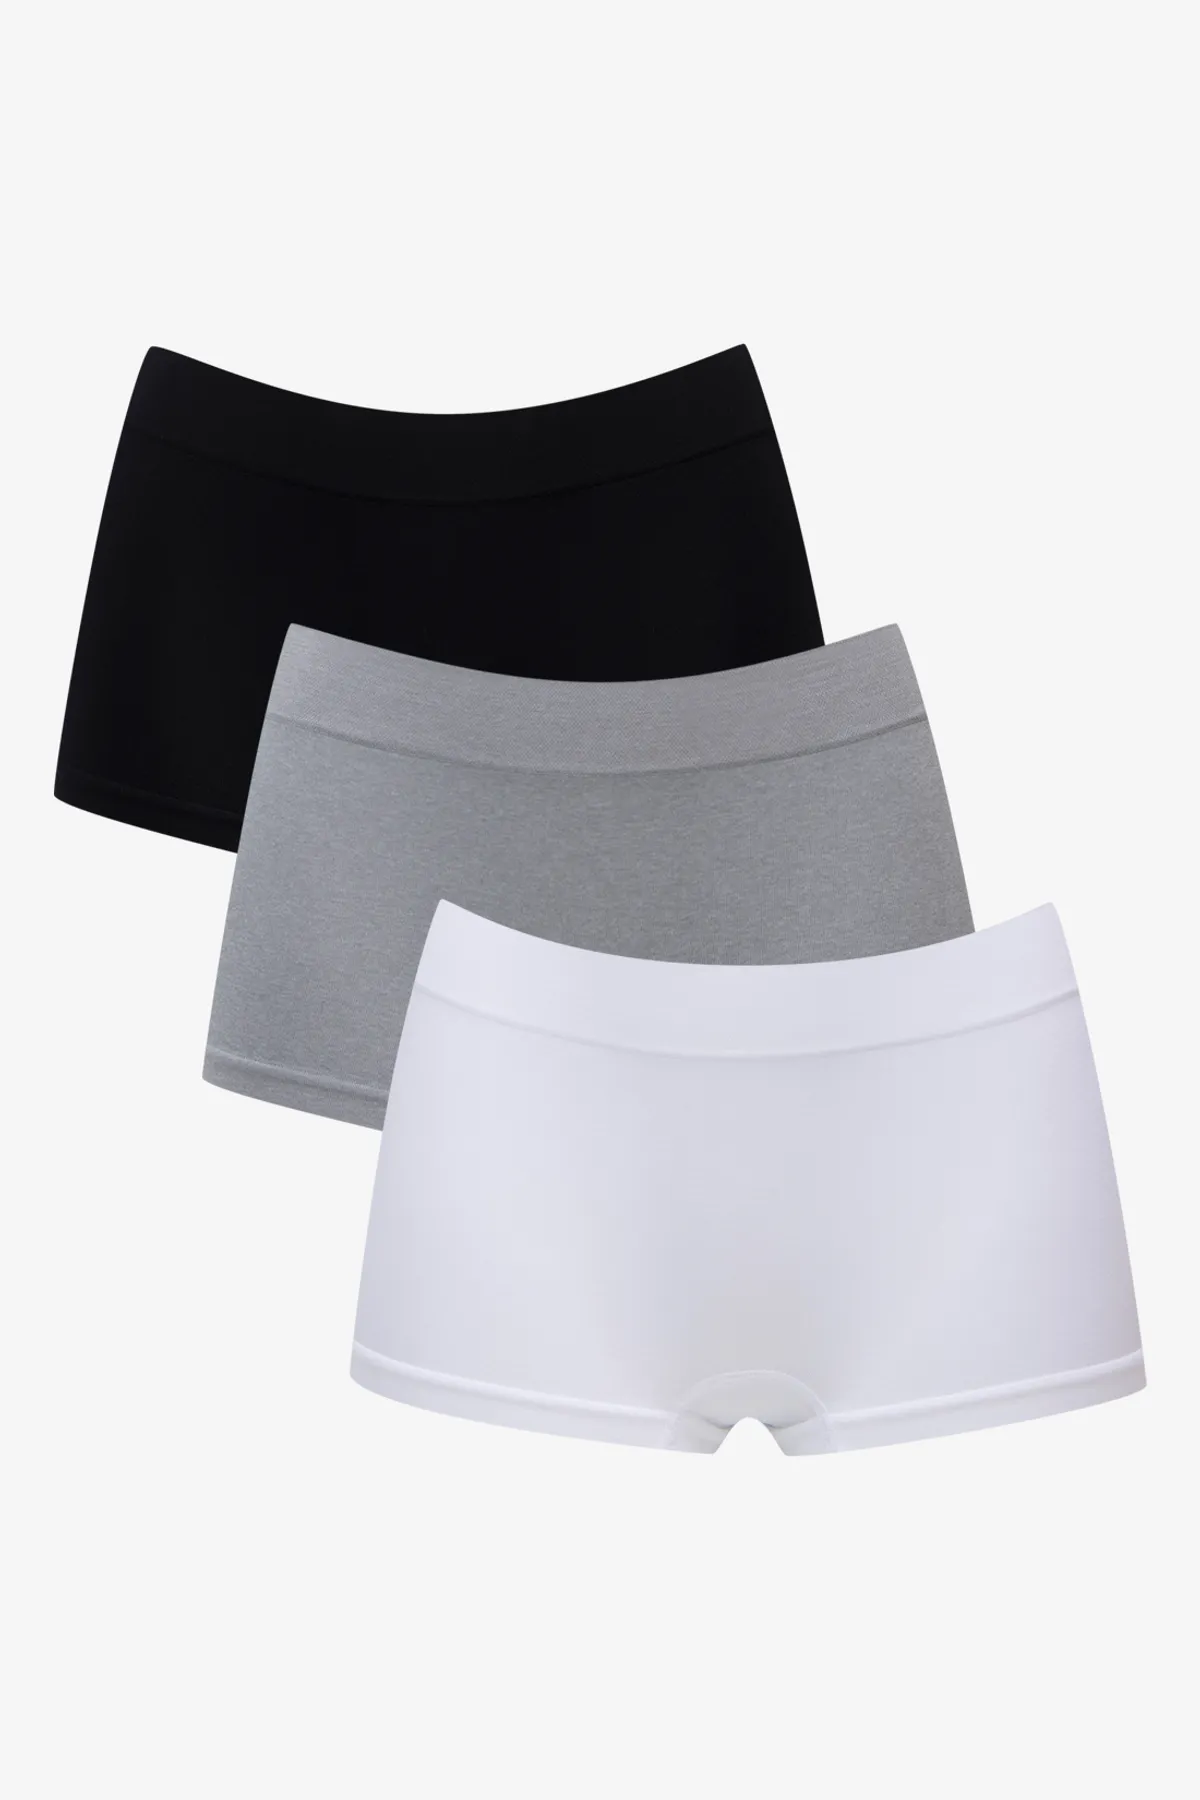 3 Pack seamfree boyley panties black, grey & white - WOMEN's Panties